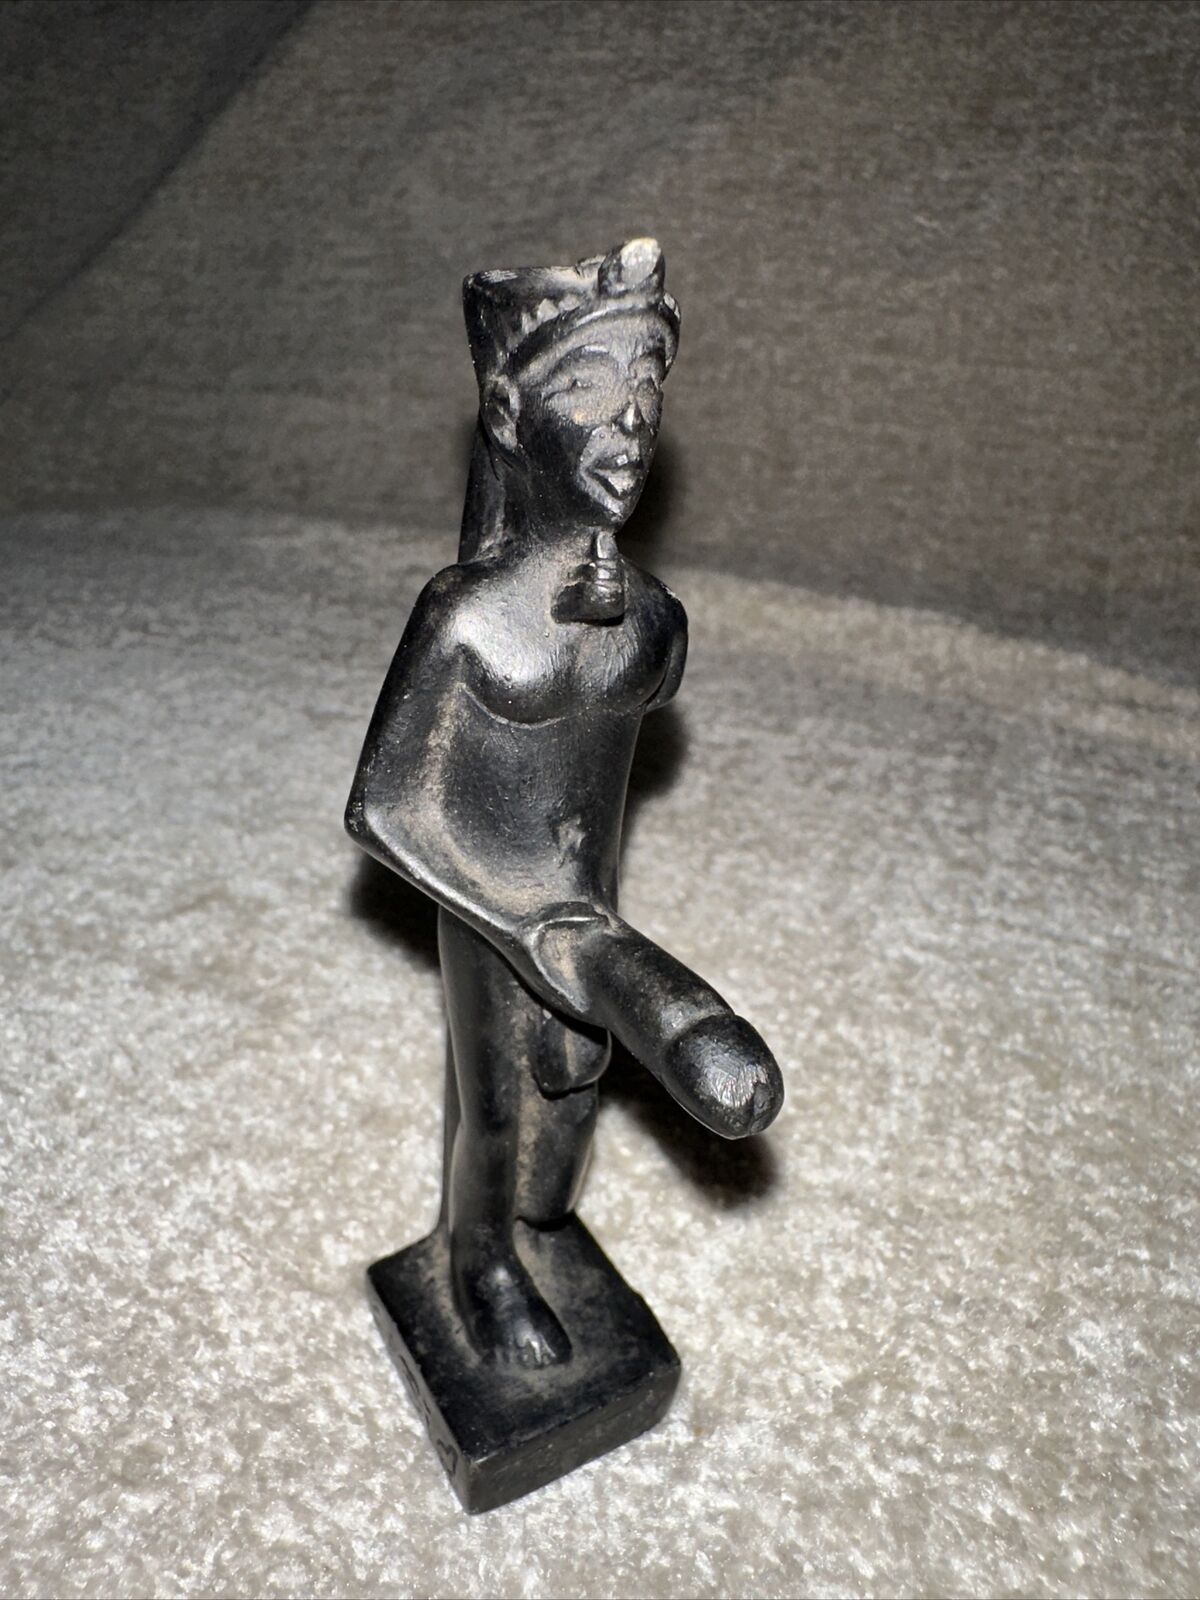 Egyptian God Miniature Statue, God of Fertility in Ancient Egypt, Statuette 4”